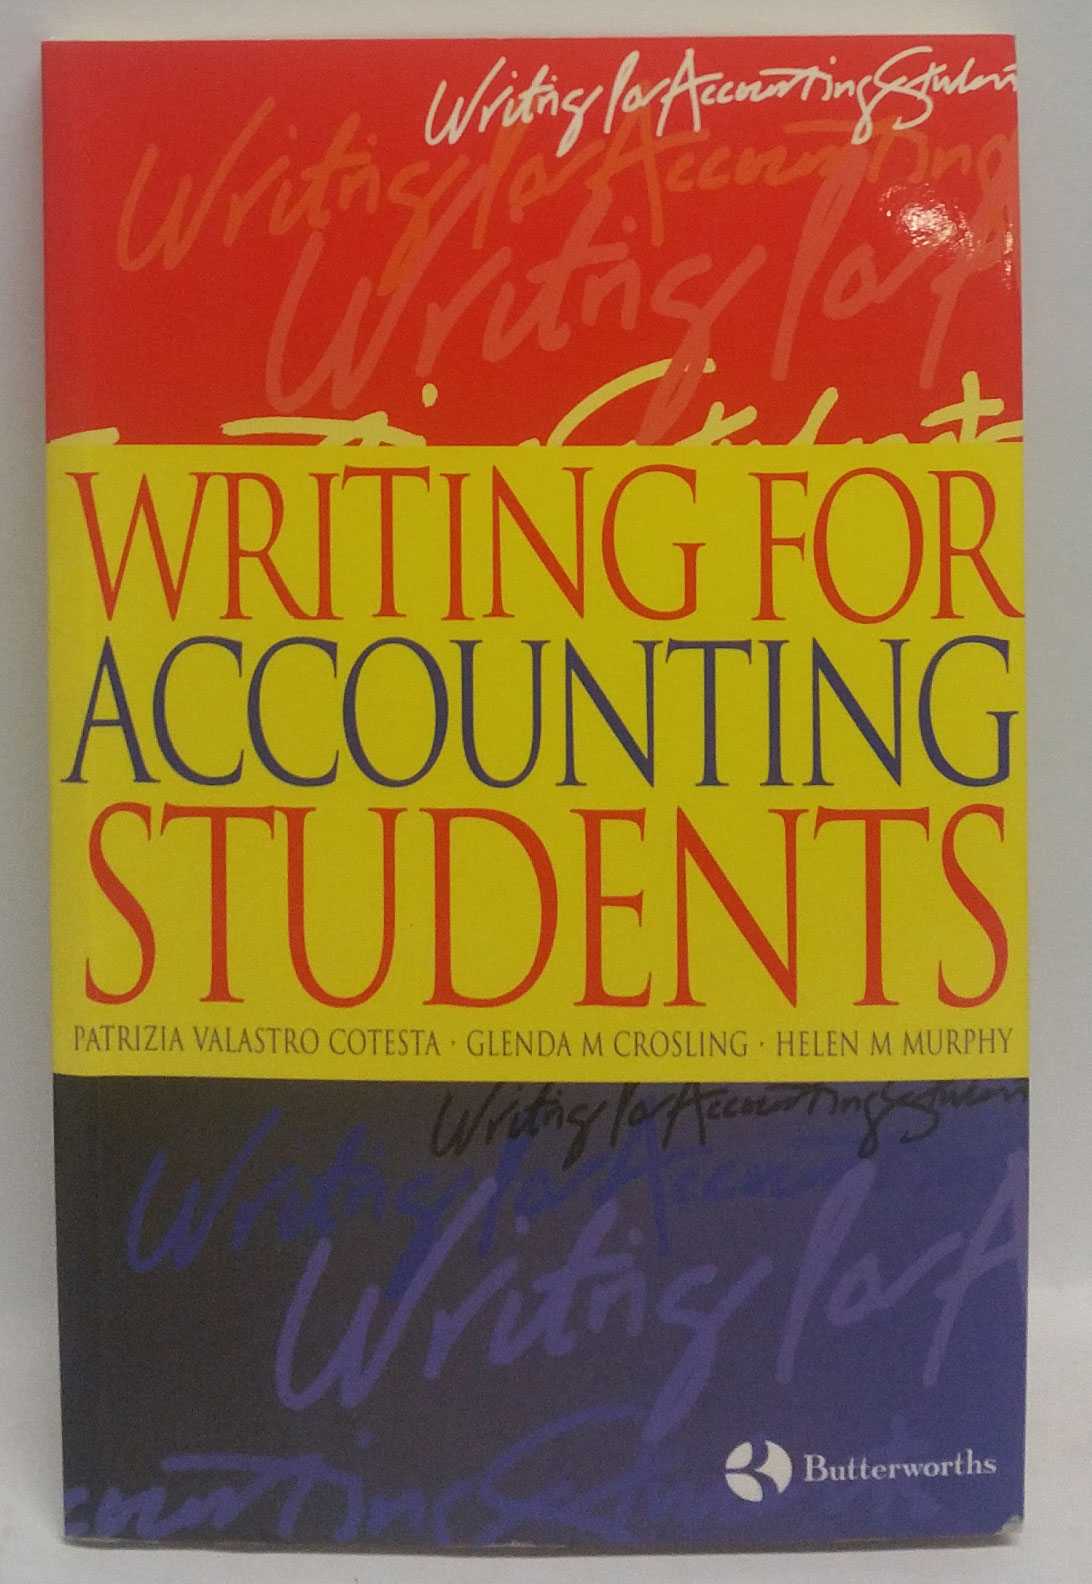 Patrizia Valastro Cotesta; Glenda M. Crosling; Helen M. Murphy - Writing For Accounting Students